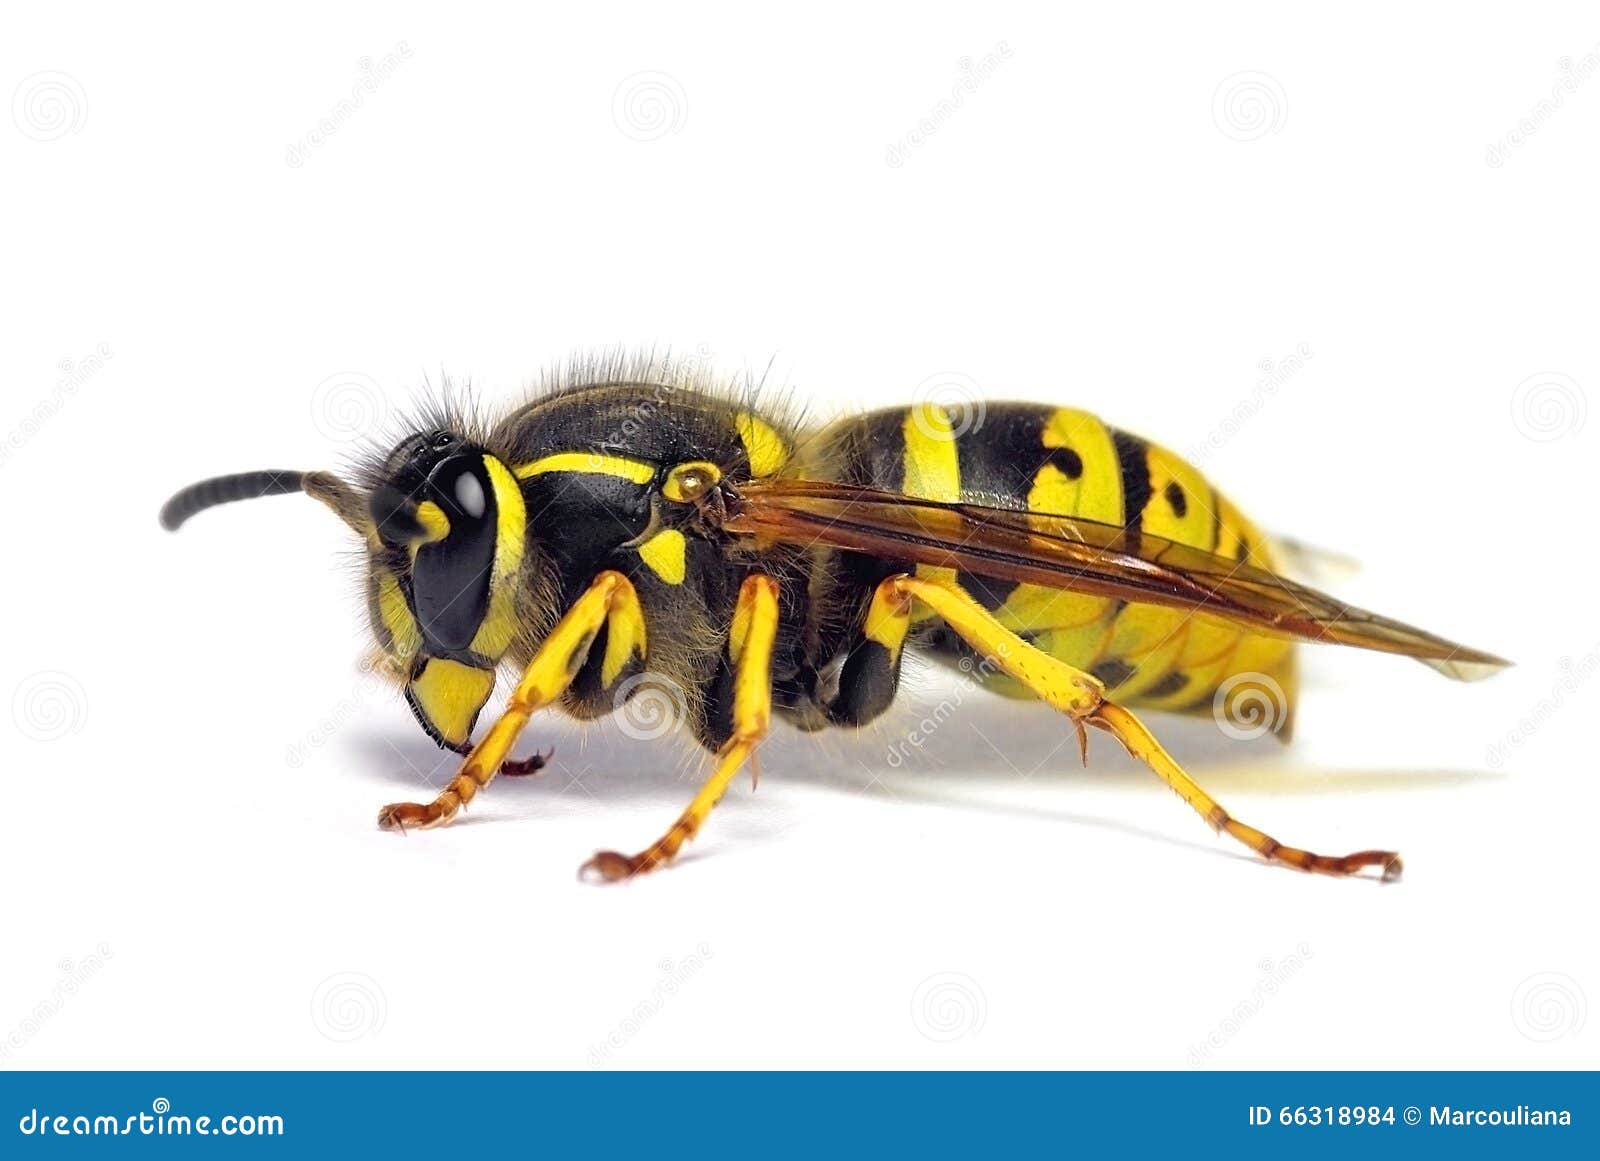 paper wasp vespula germanica